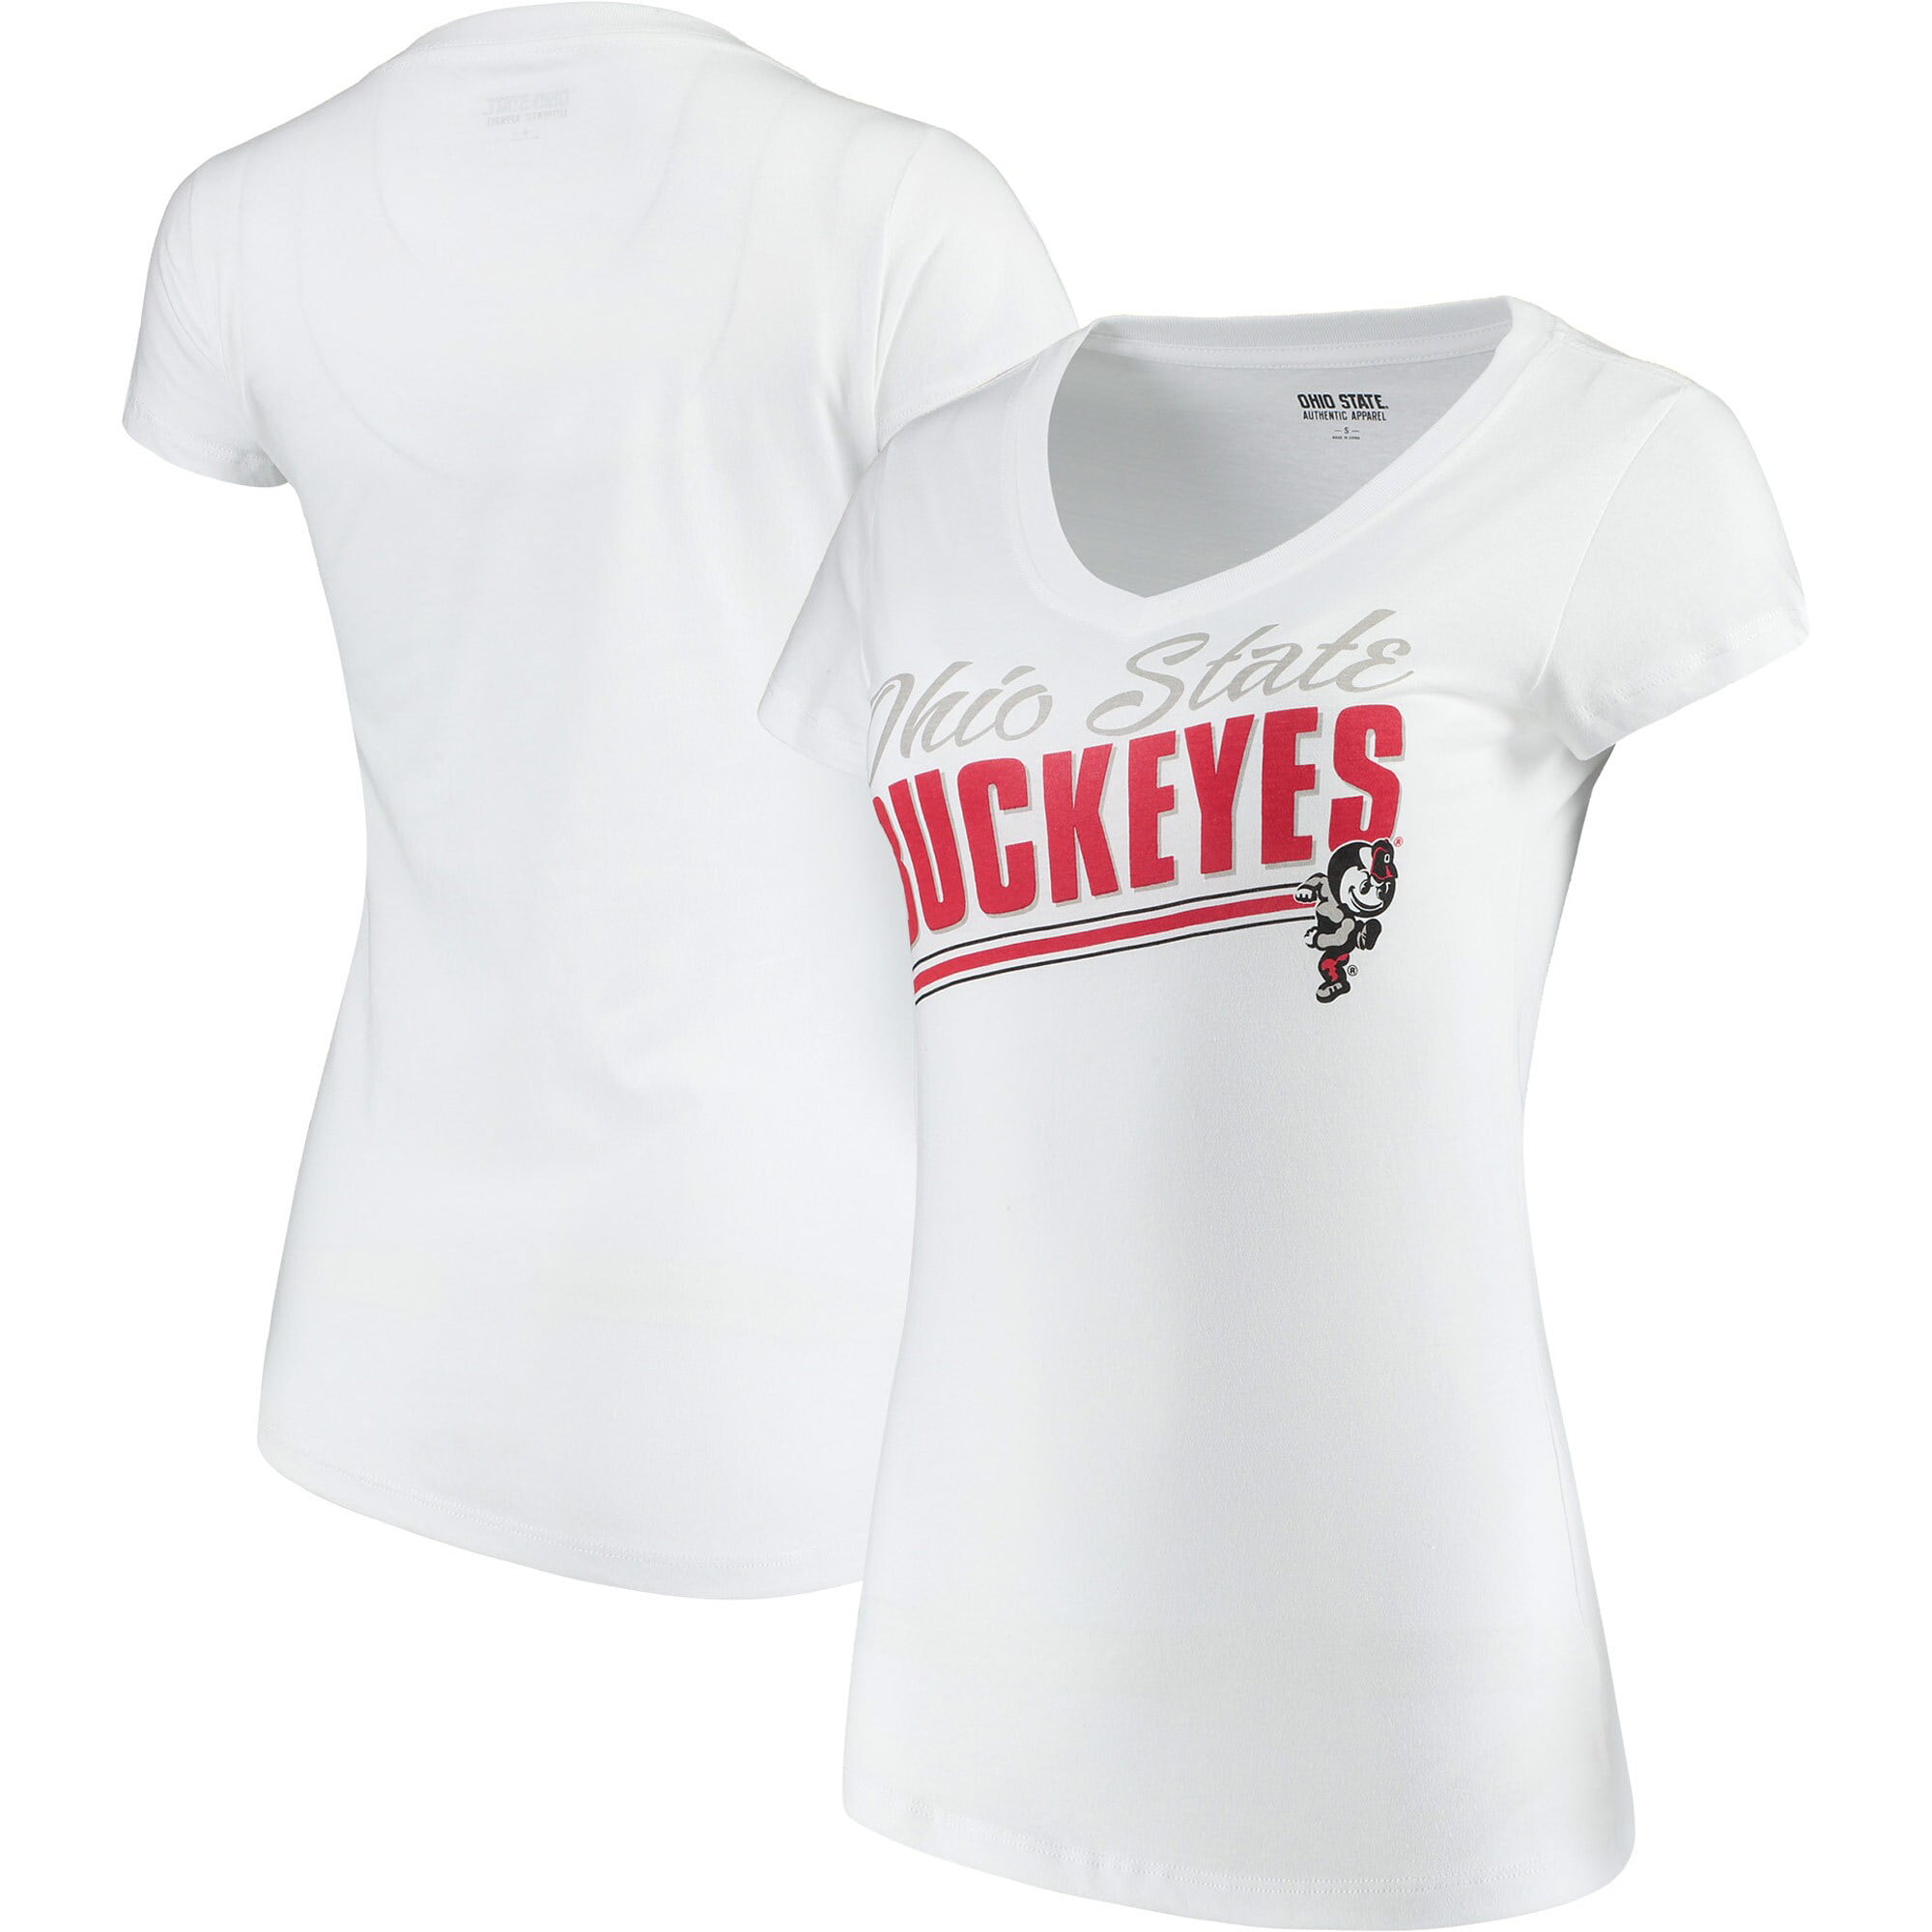 Ohio State Buckeyes Women's Slant V-Neck T-Shirt - White - Walmart.com ...